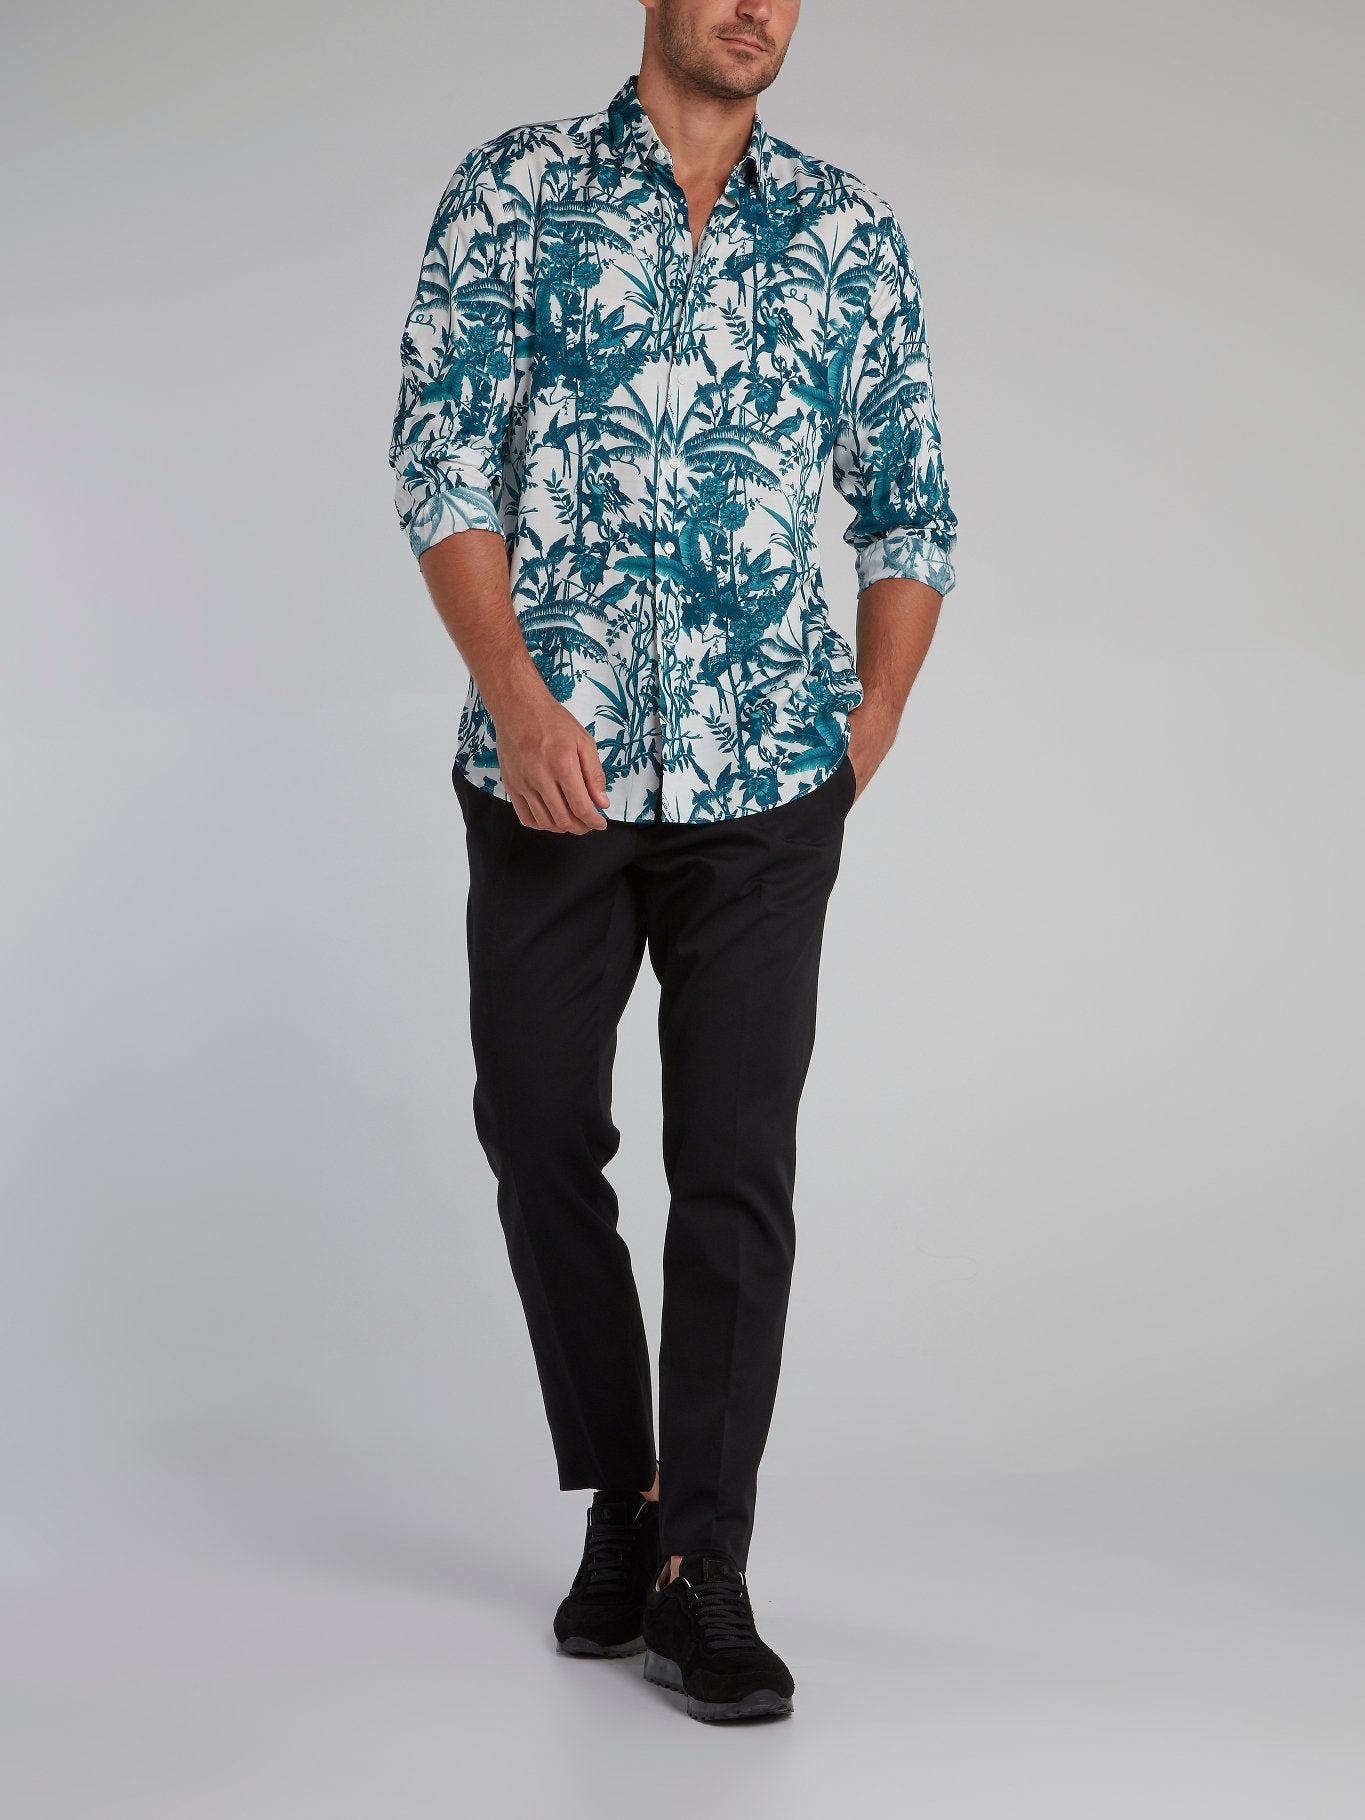 Tropical Print Long Sleeve Shirt